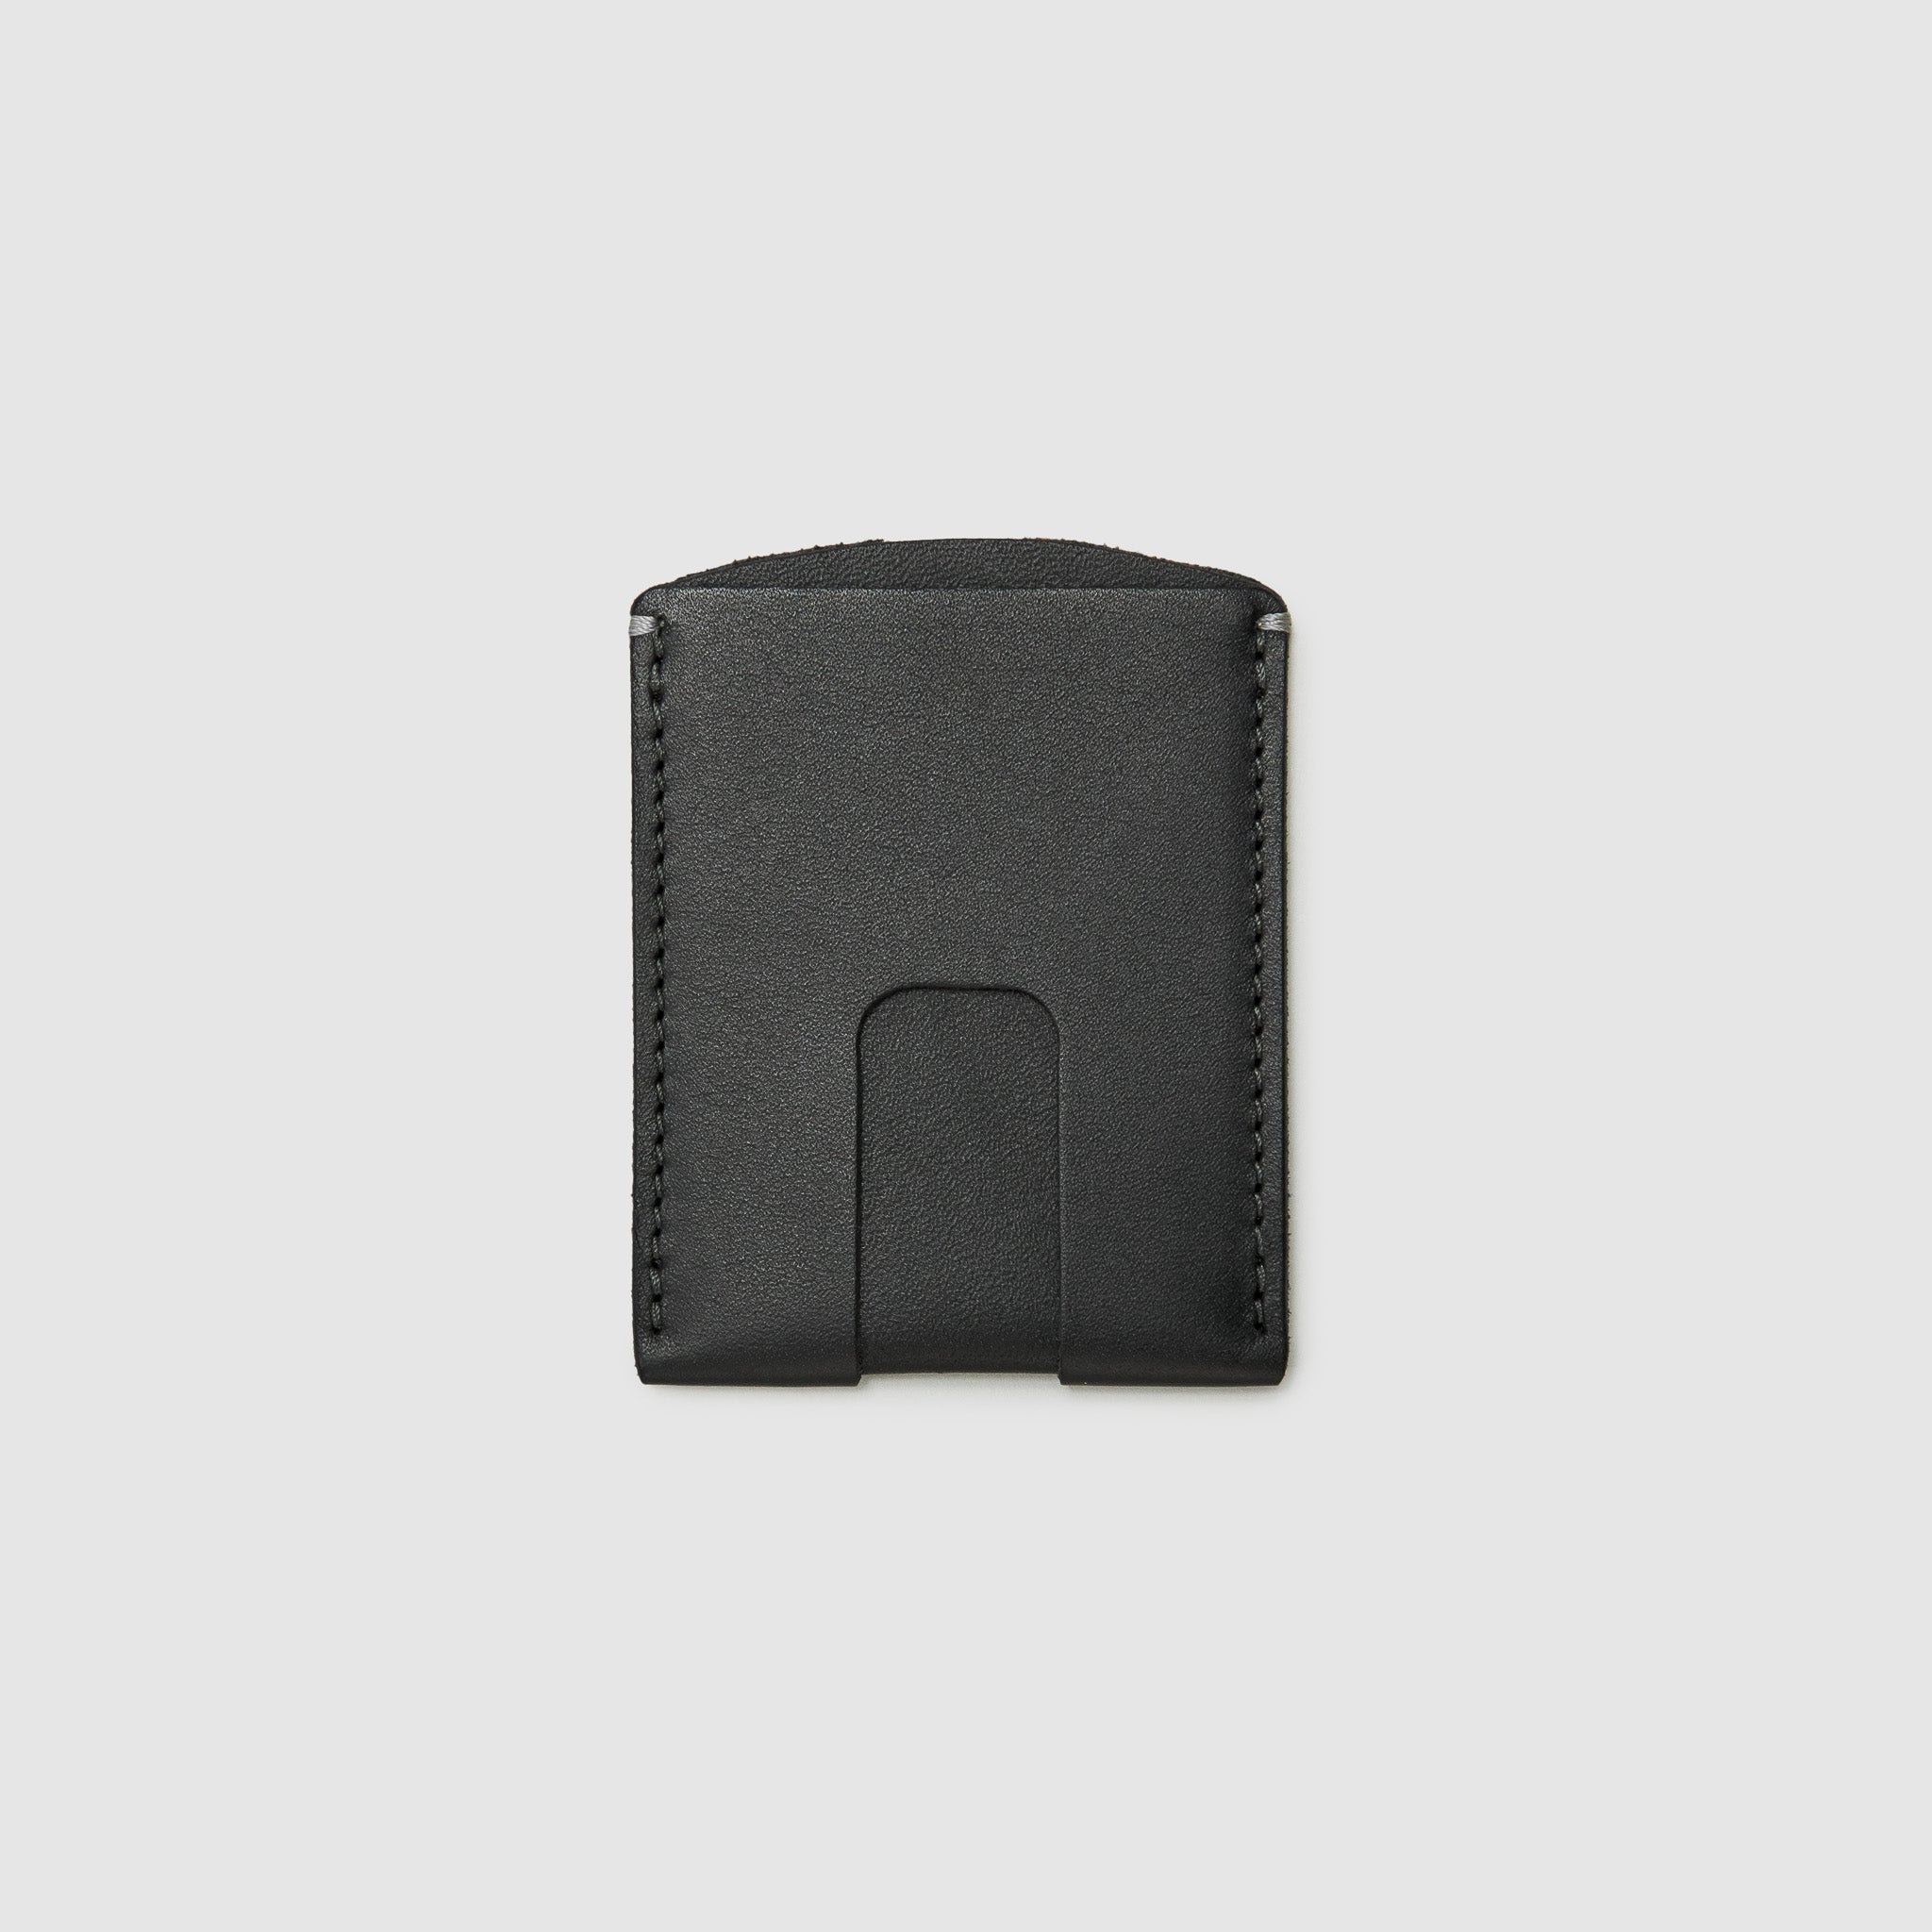 Anson Calder Card Holder Wallet french calfskin leather with cash slot _black